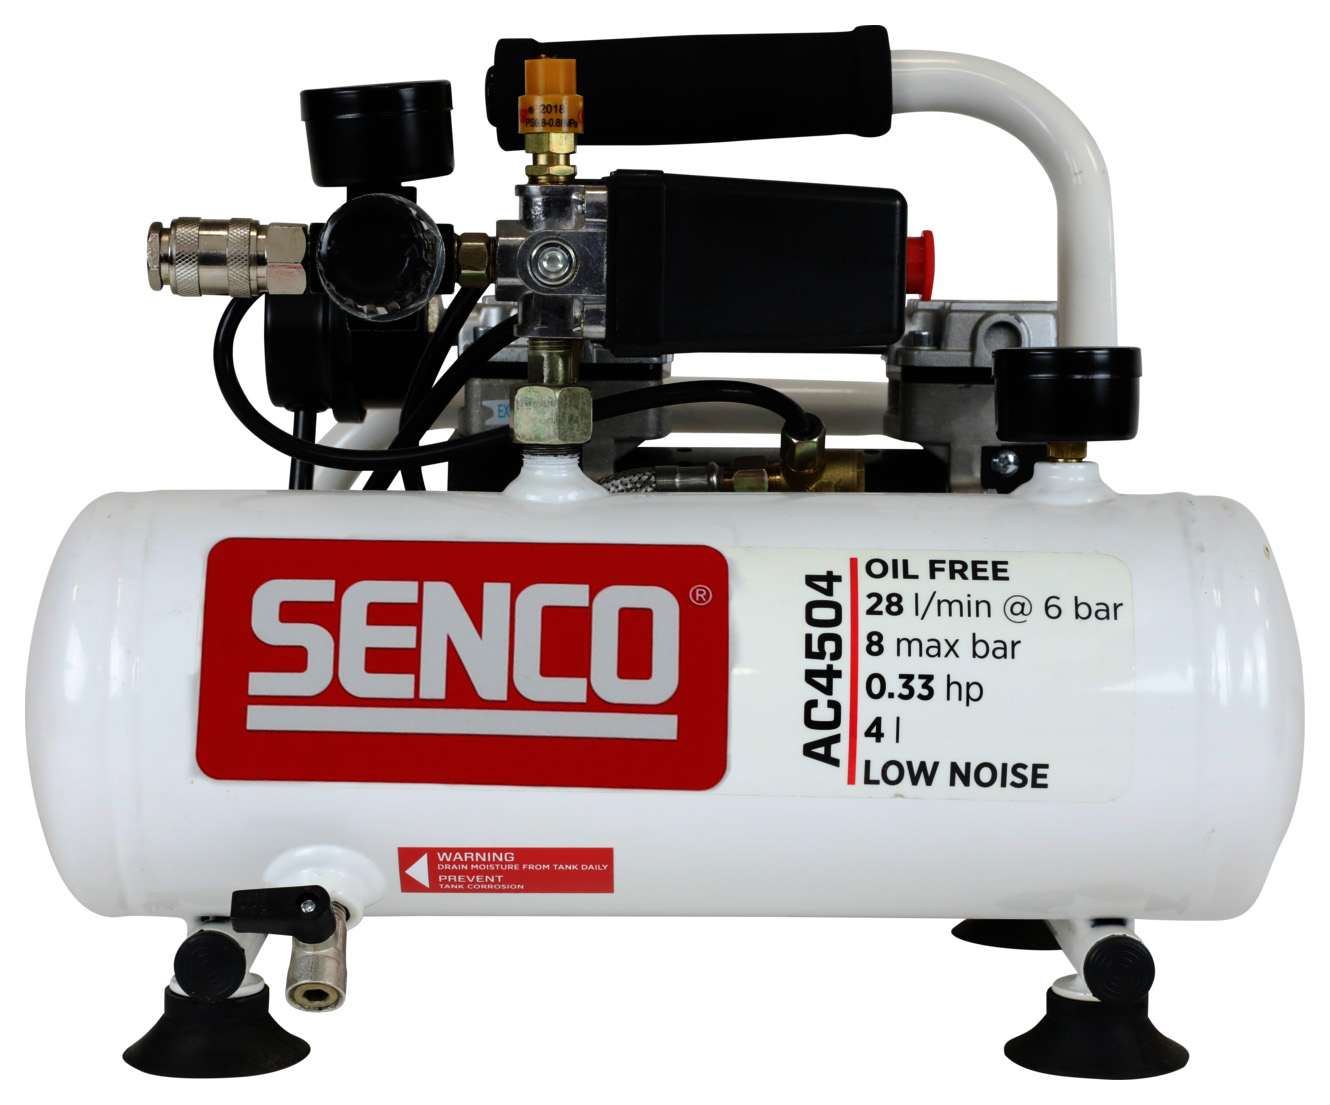 Senco AC4504 4L Low Noise Oil Free Air Compressor - 230V